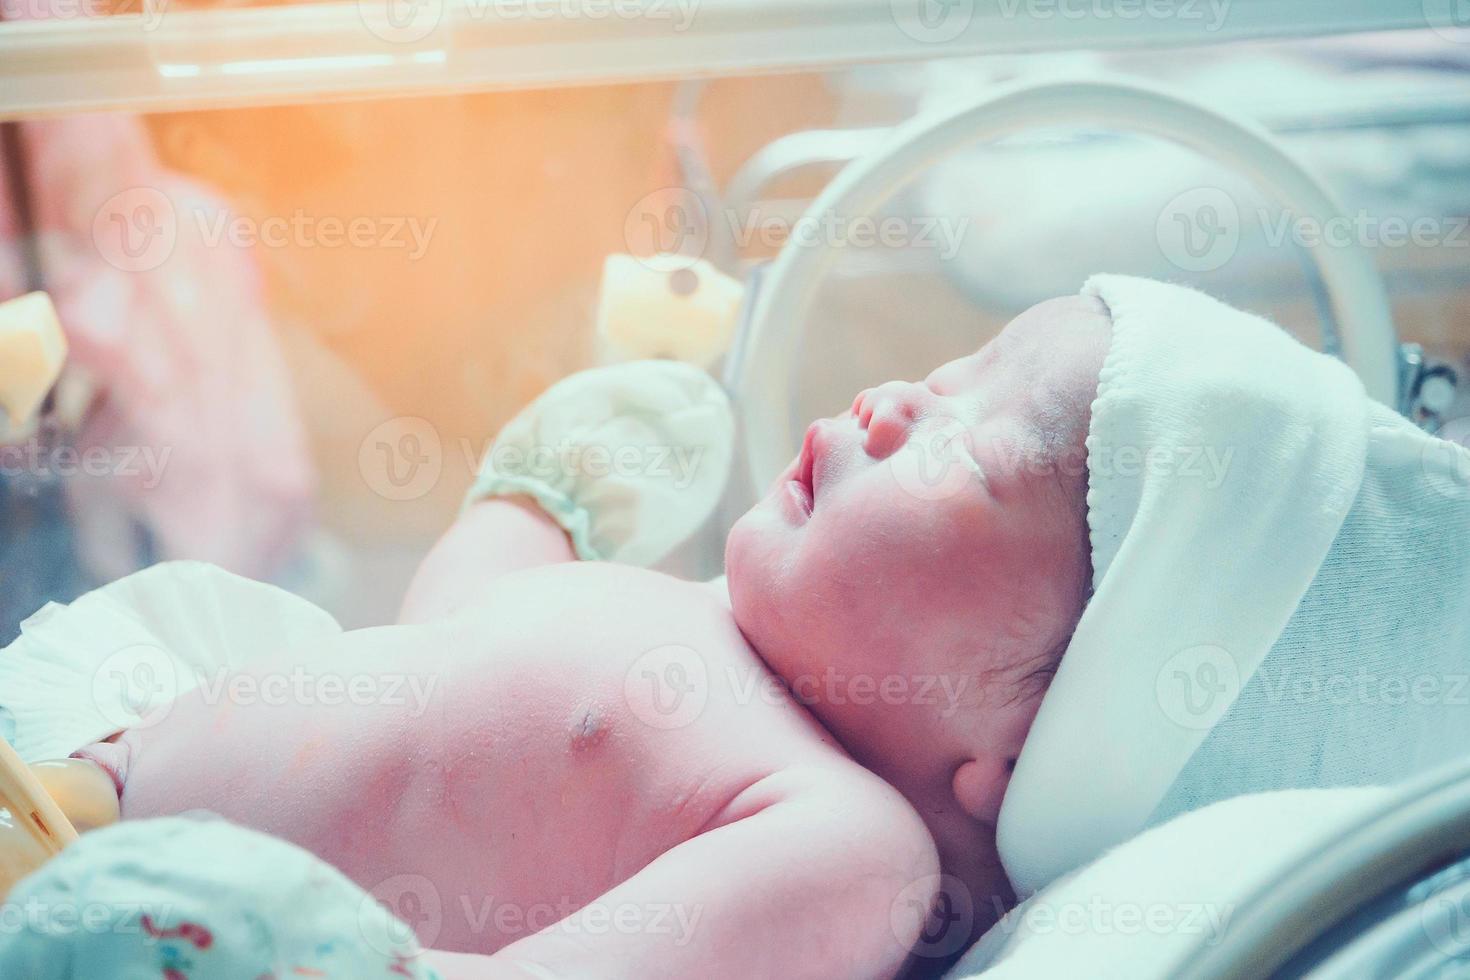 nyfödd bebis inuti inkubator i sjukhus posta leverans rum foto